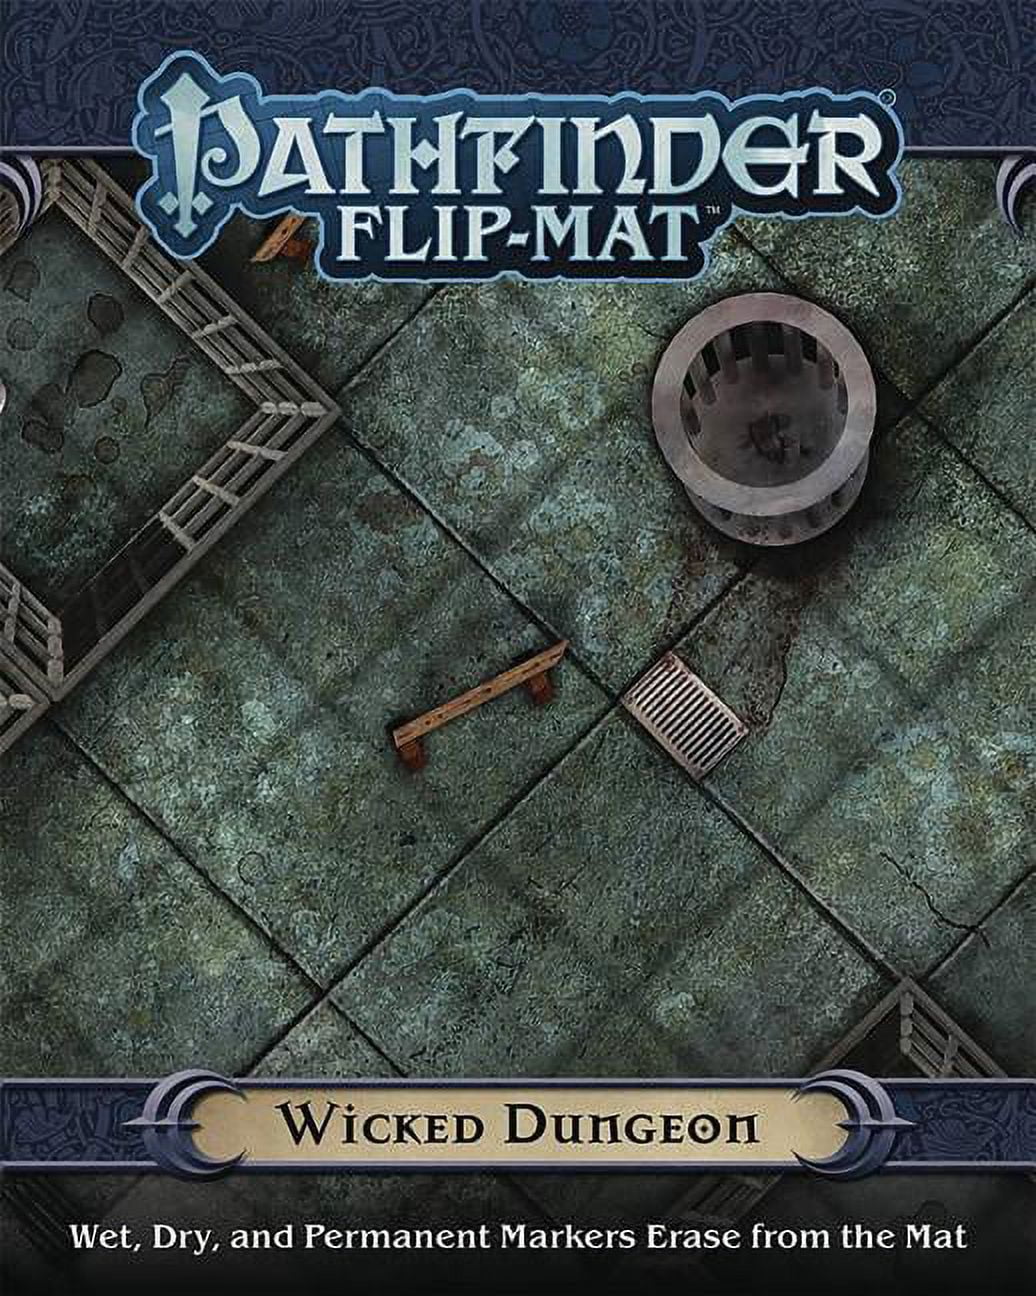 Pzo30098 Pathfinder - Flip-mat - Wicked Dungeon - Board Game